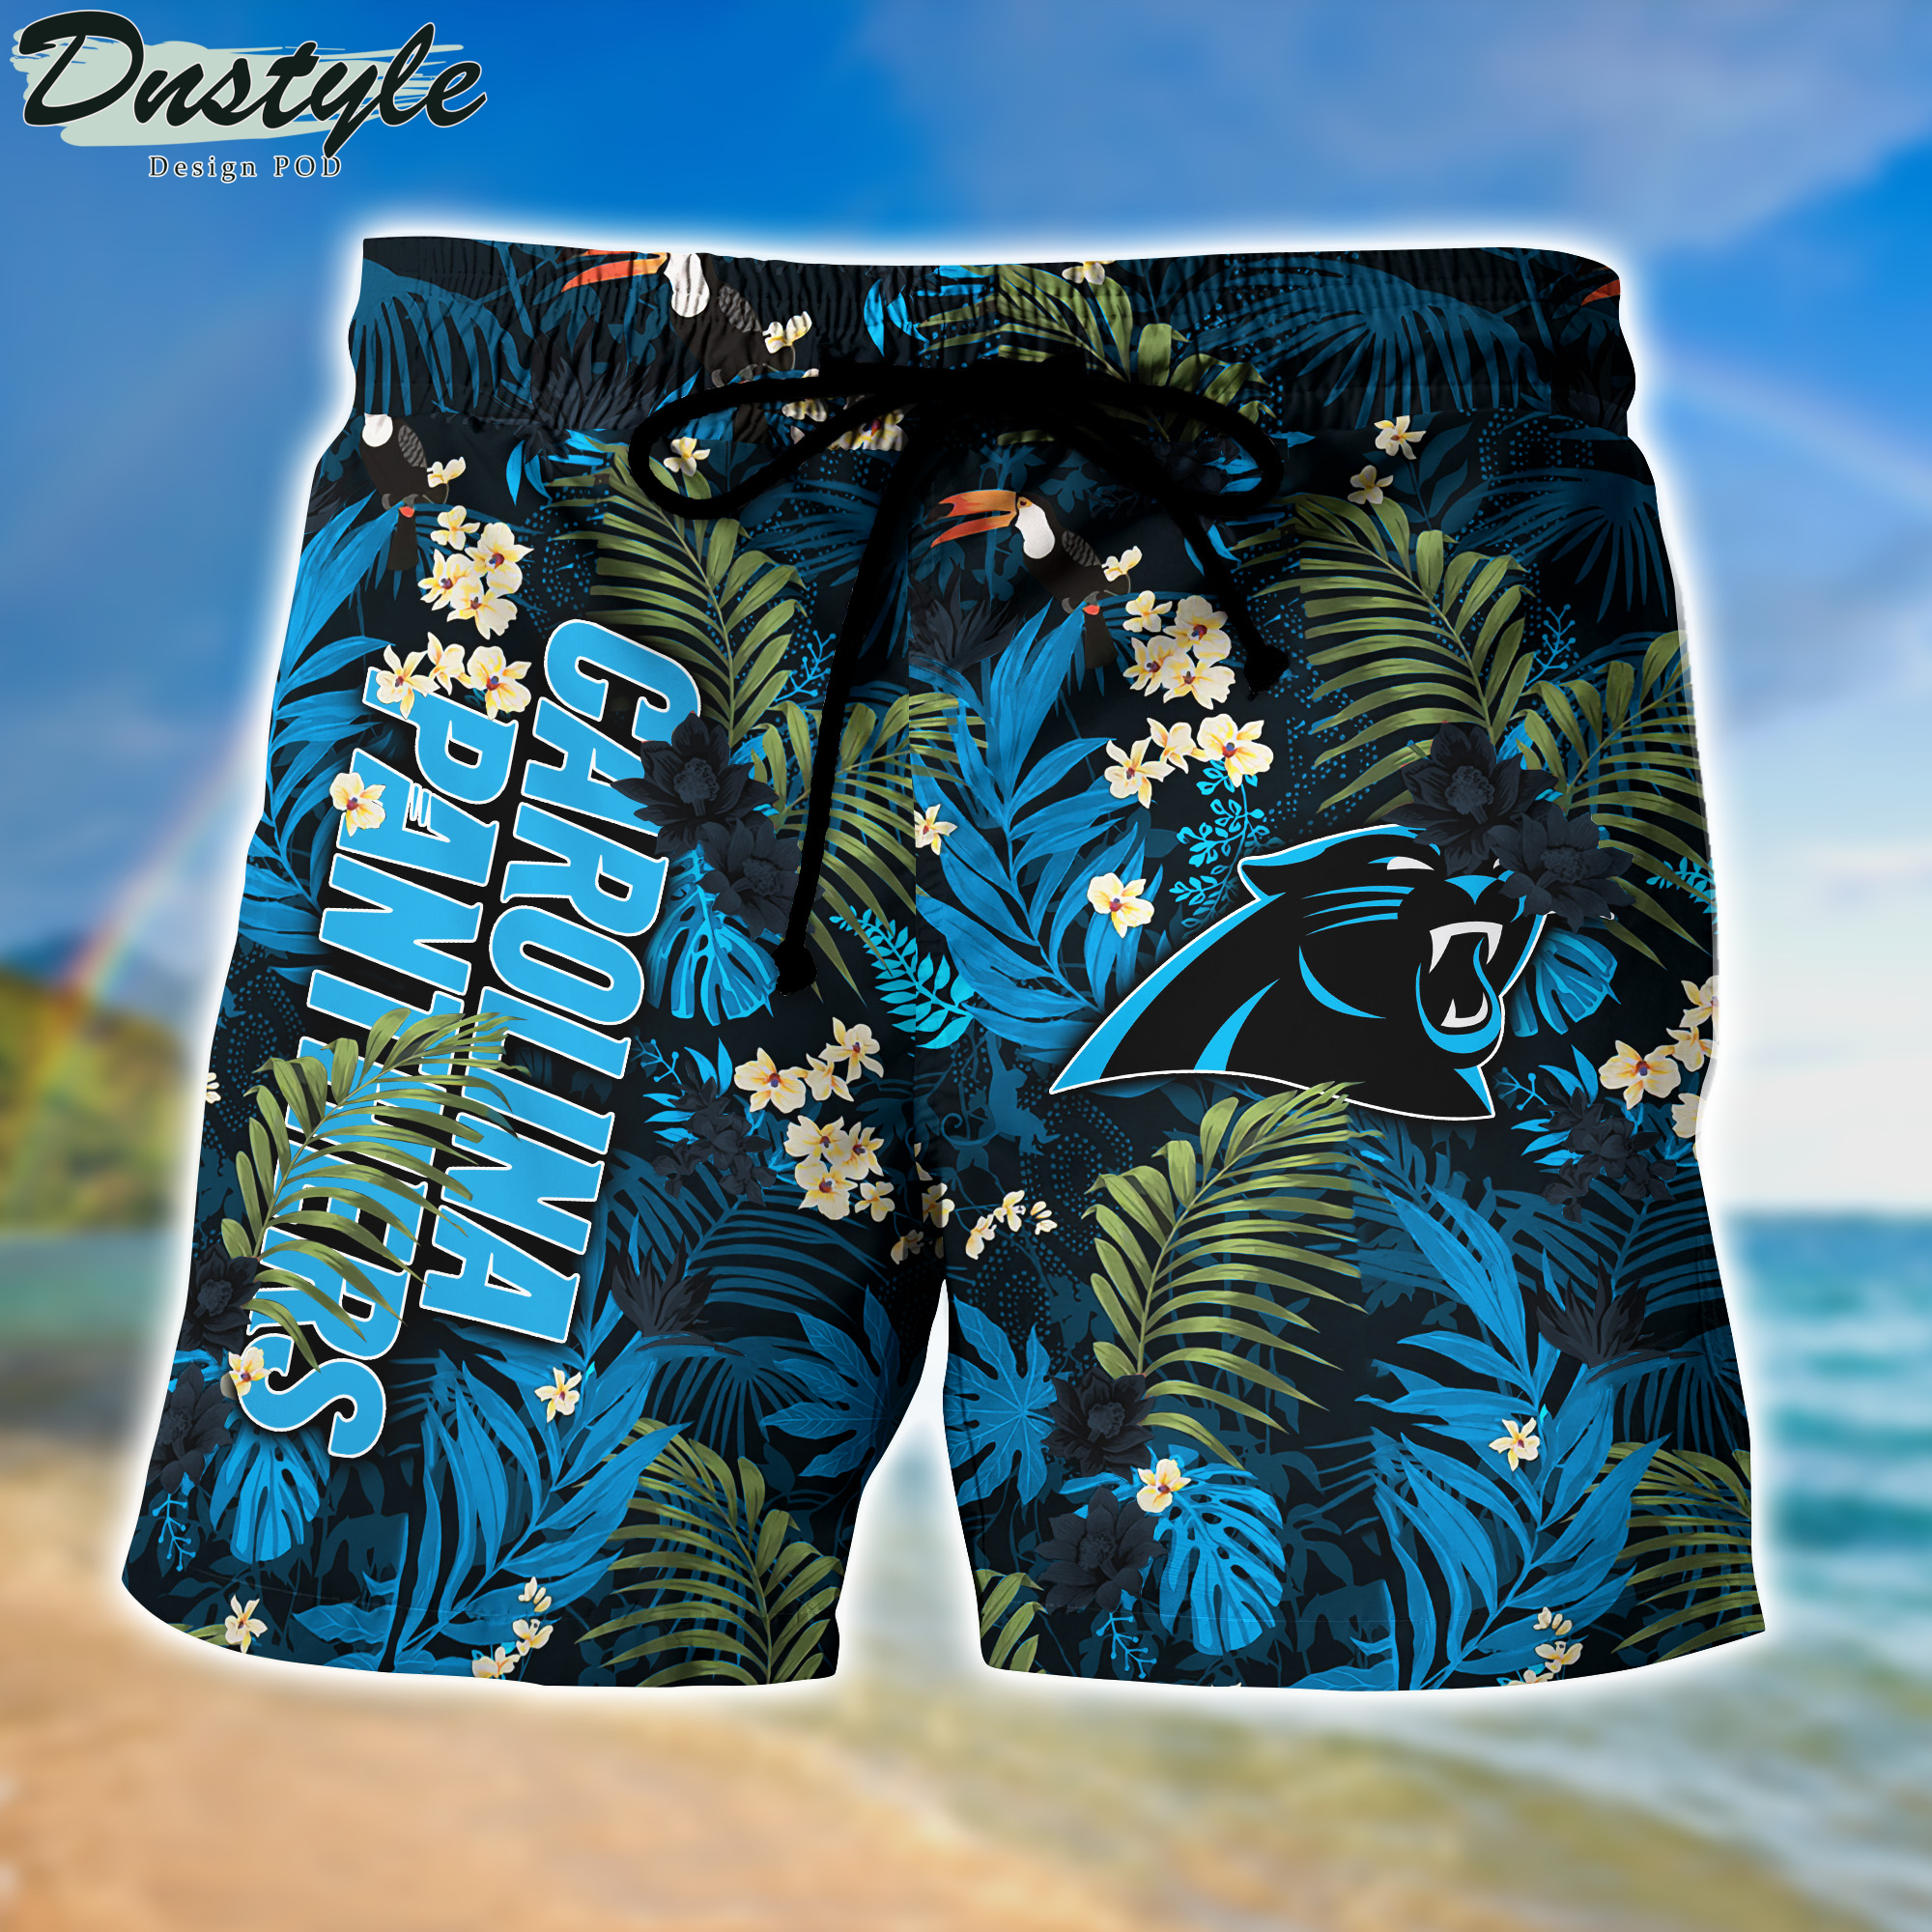 Carolina Panthers Hawaii Shirt And Shorts New Collection